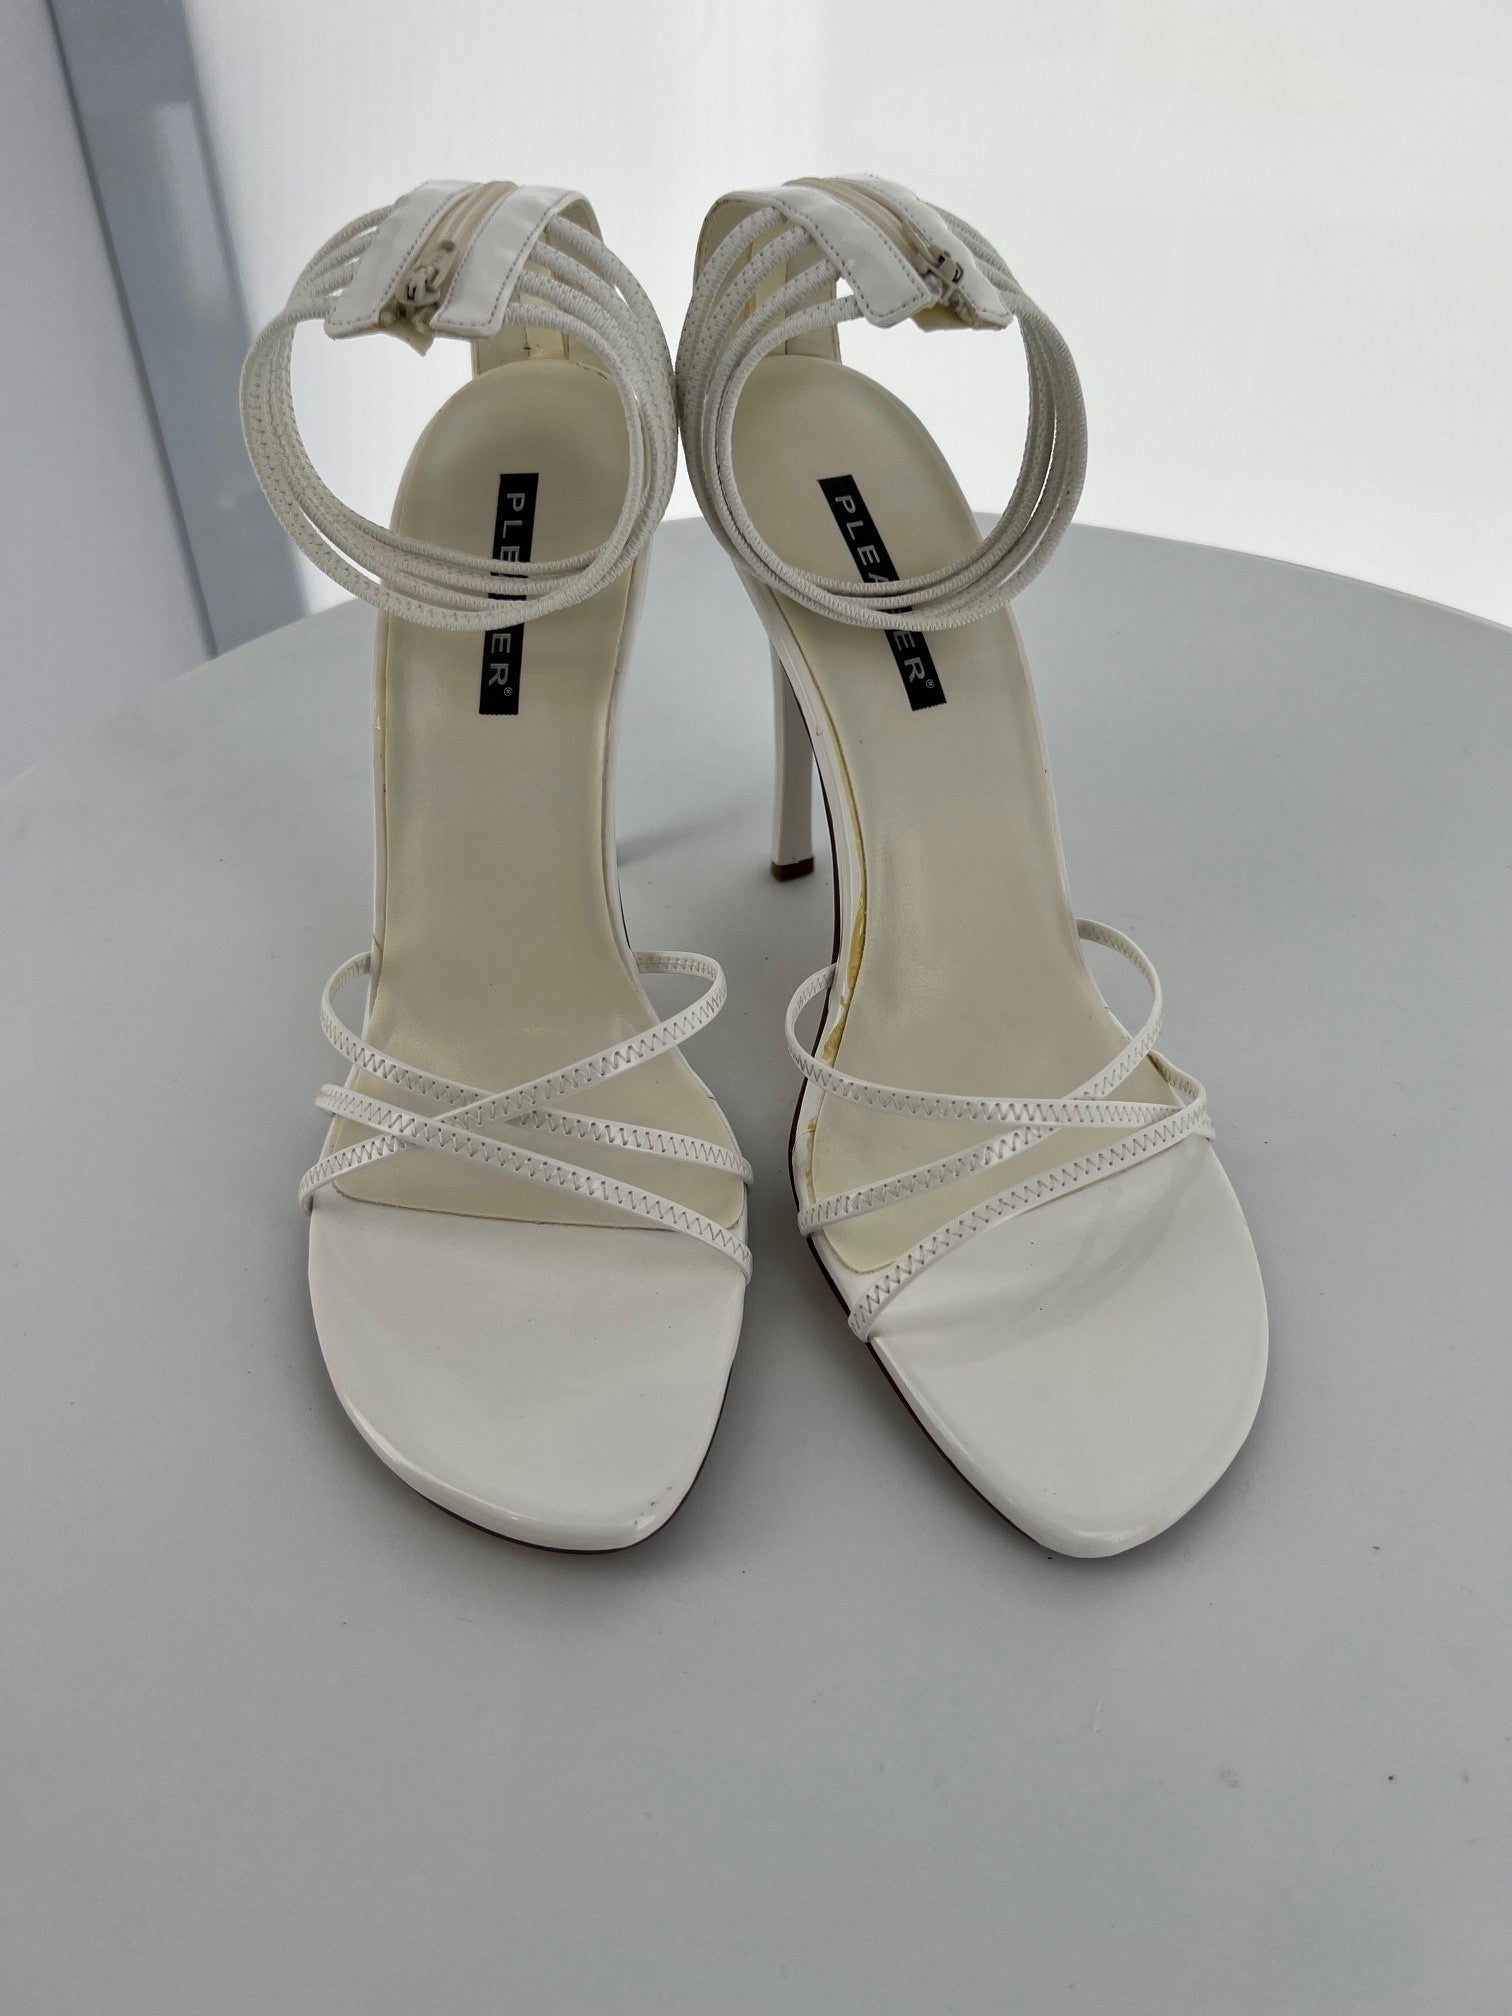 FRESH-36 Pleaser White Patent High Heel Alternative Footwear Discontinued Sale Stock